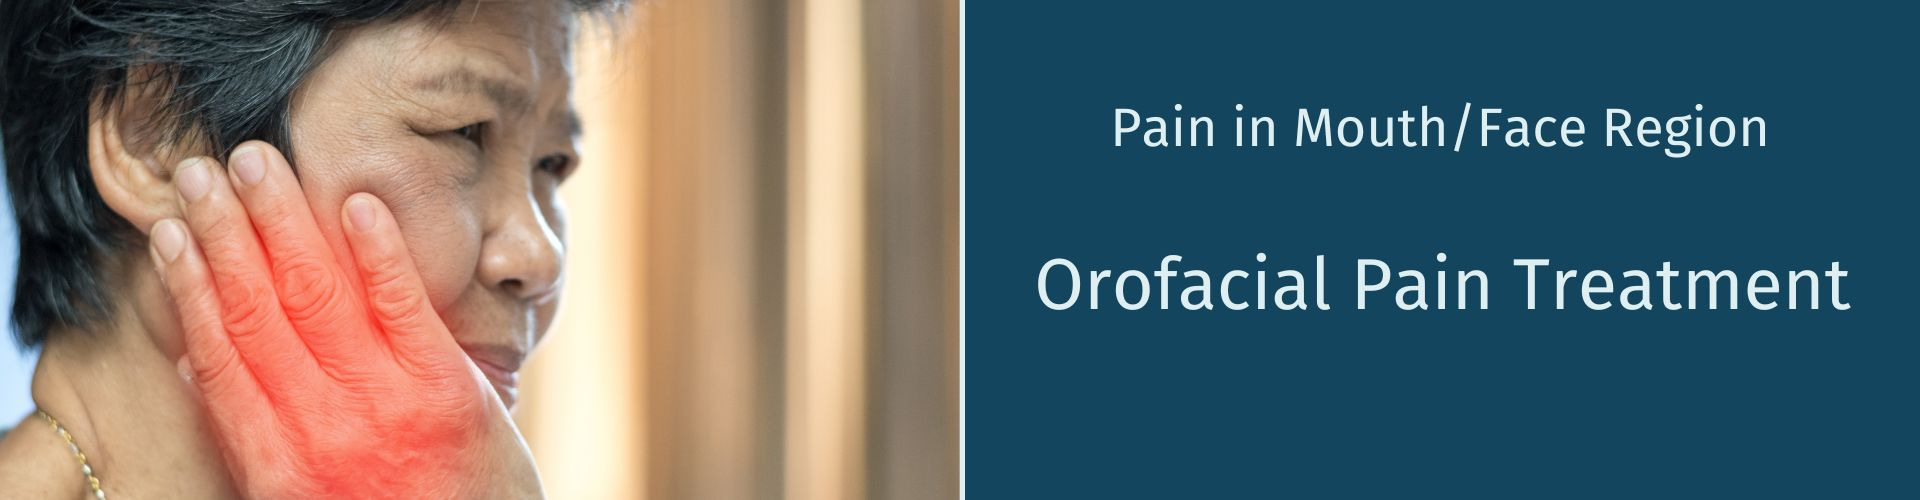 What is orofacial pain? - Orofacial Pain Treatment Delhi